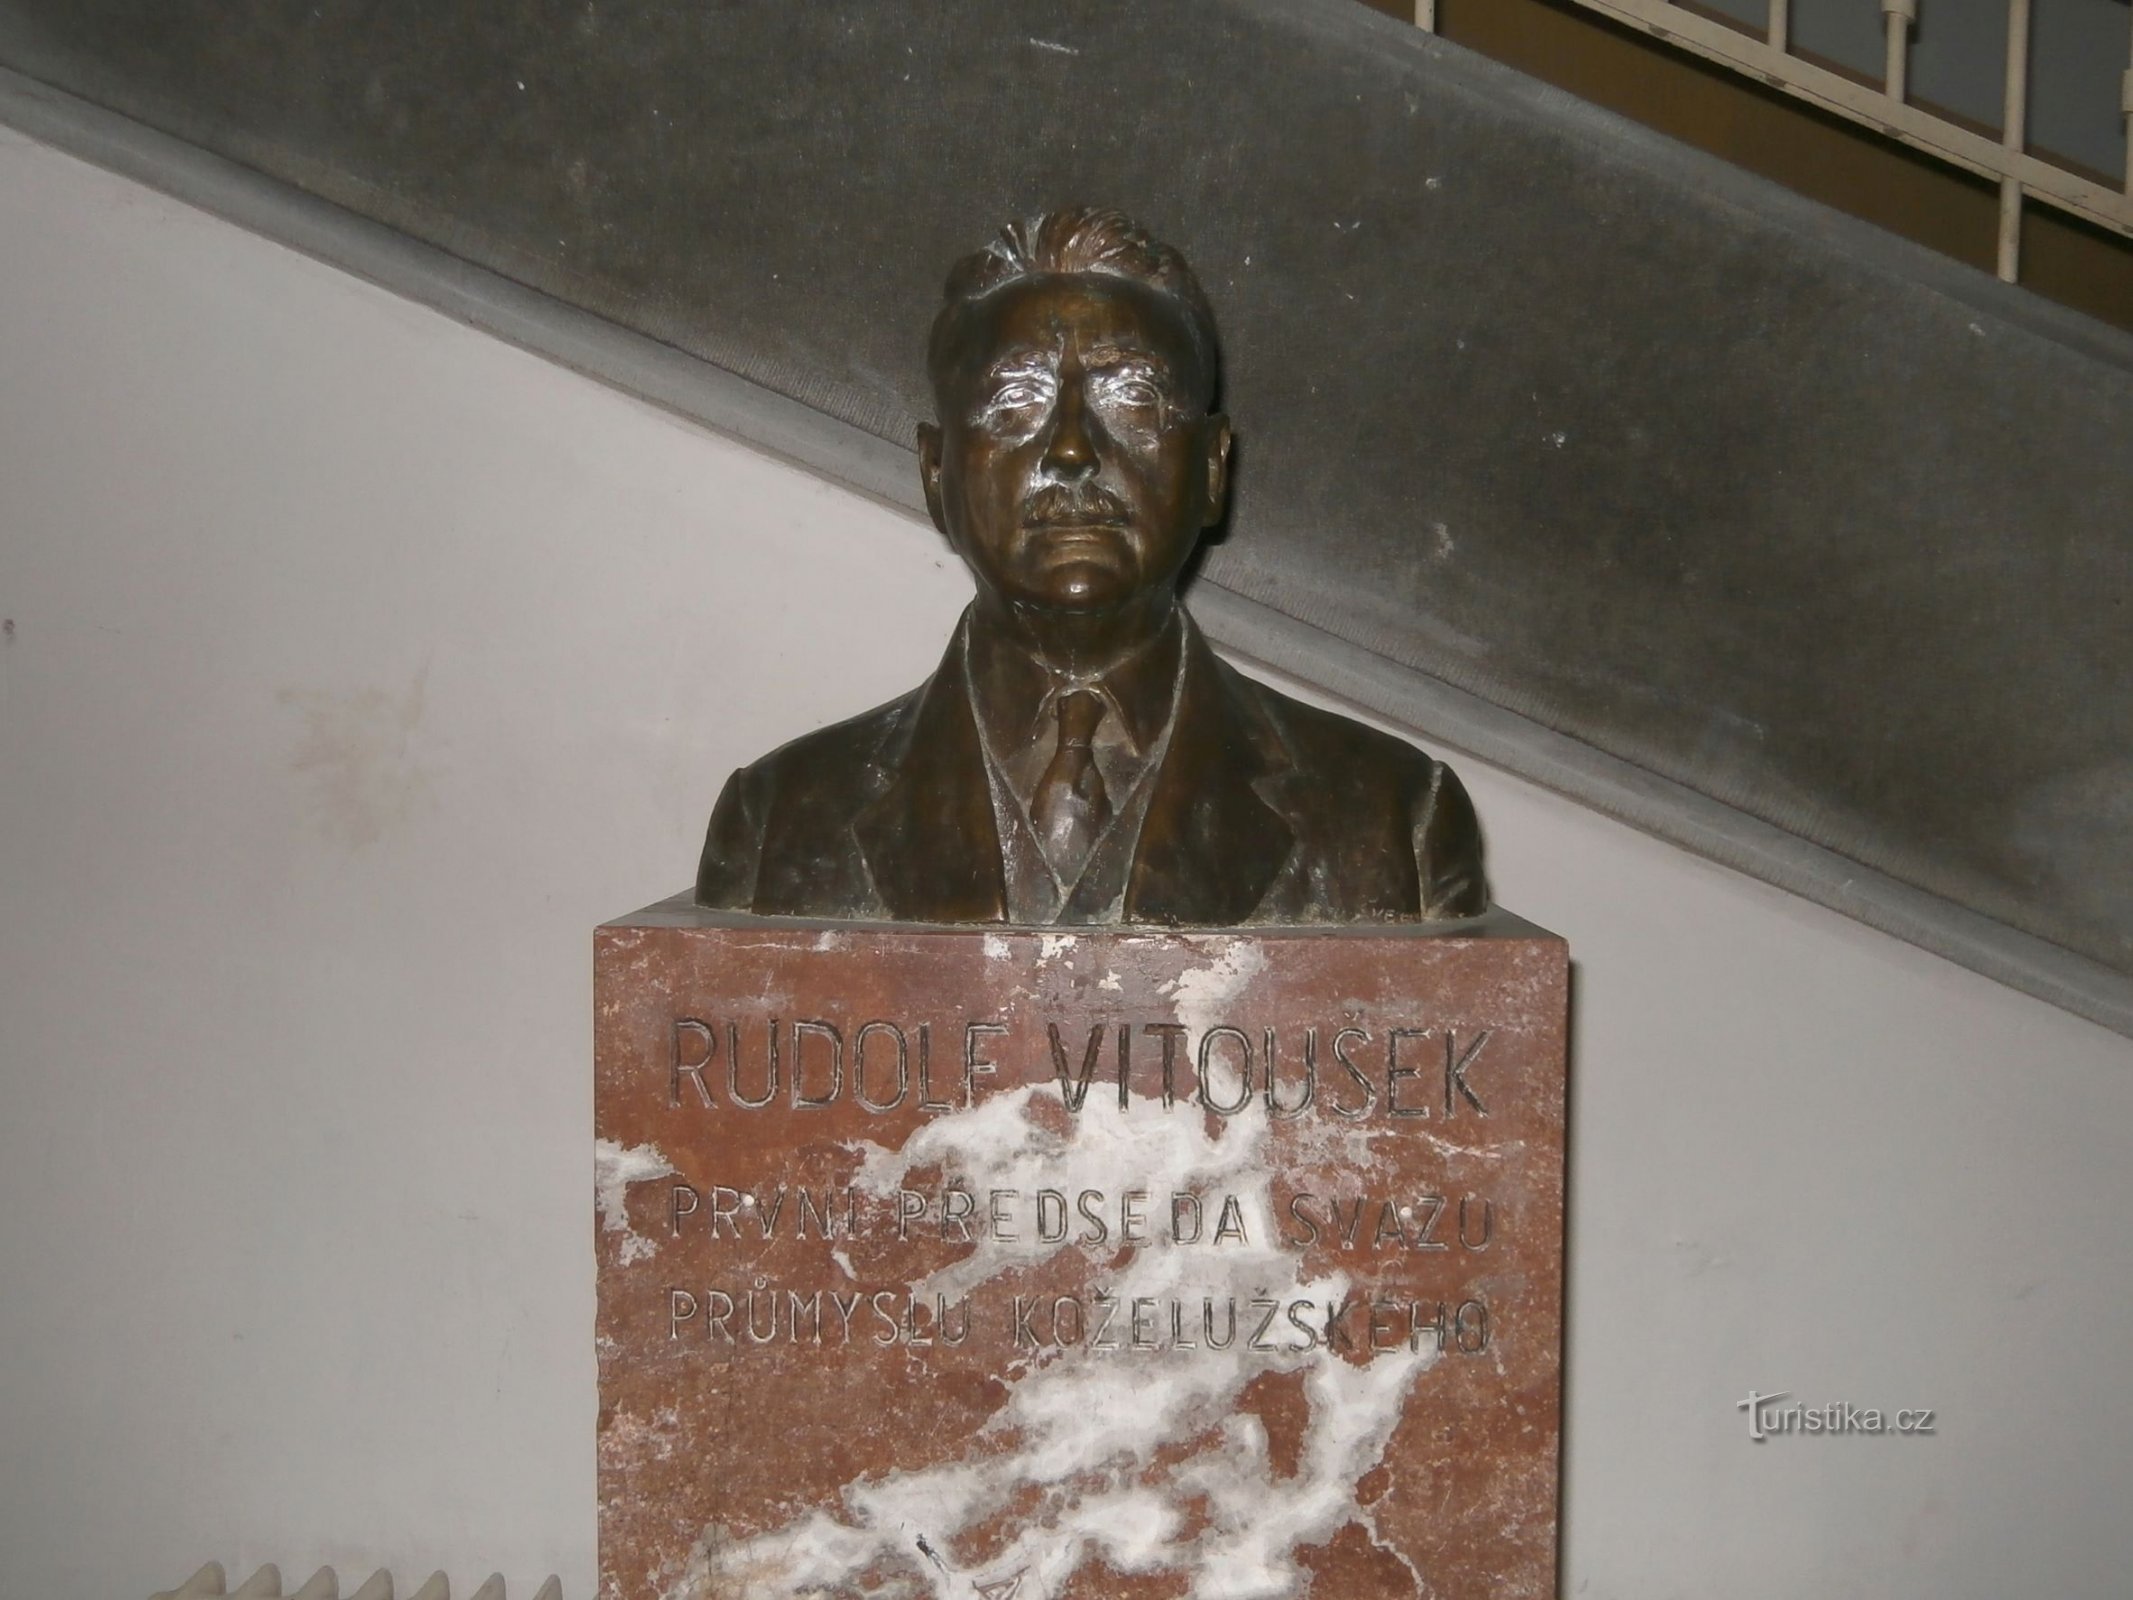 Busta Rudolfa Vitouška (Hradec Králové, 14.9.2013)